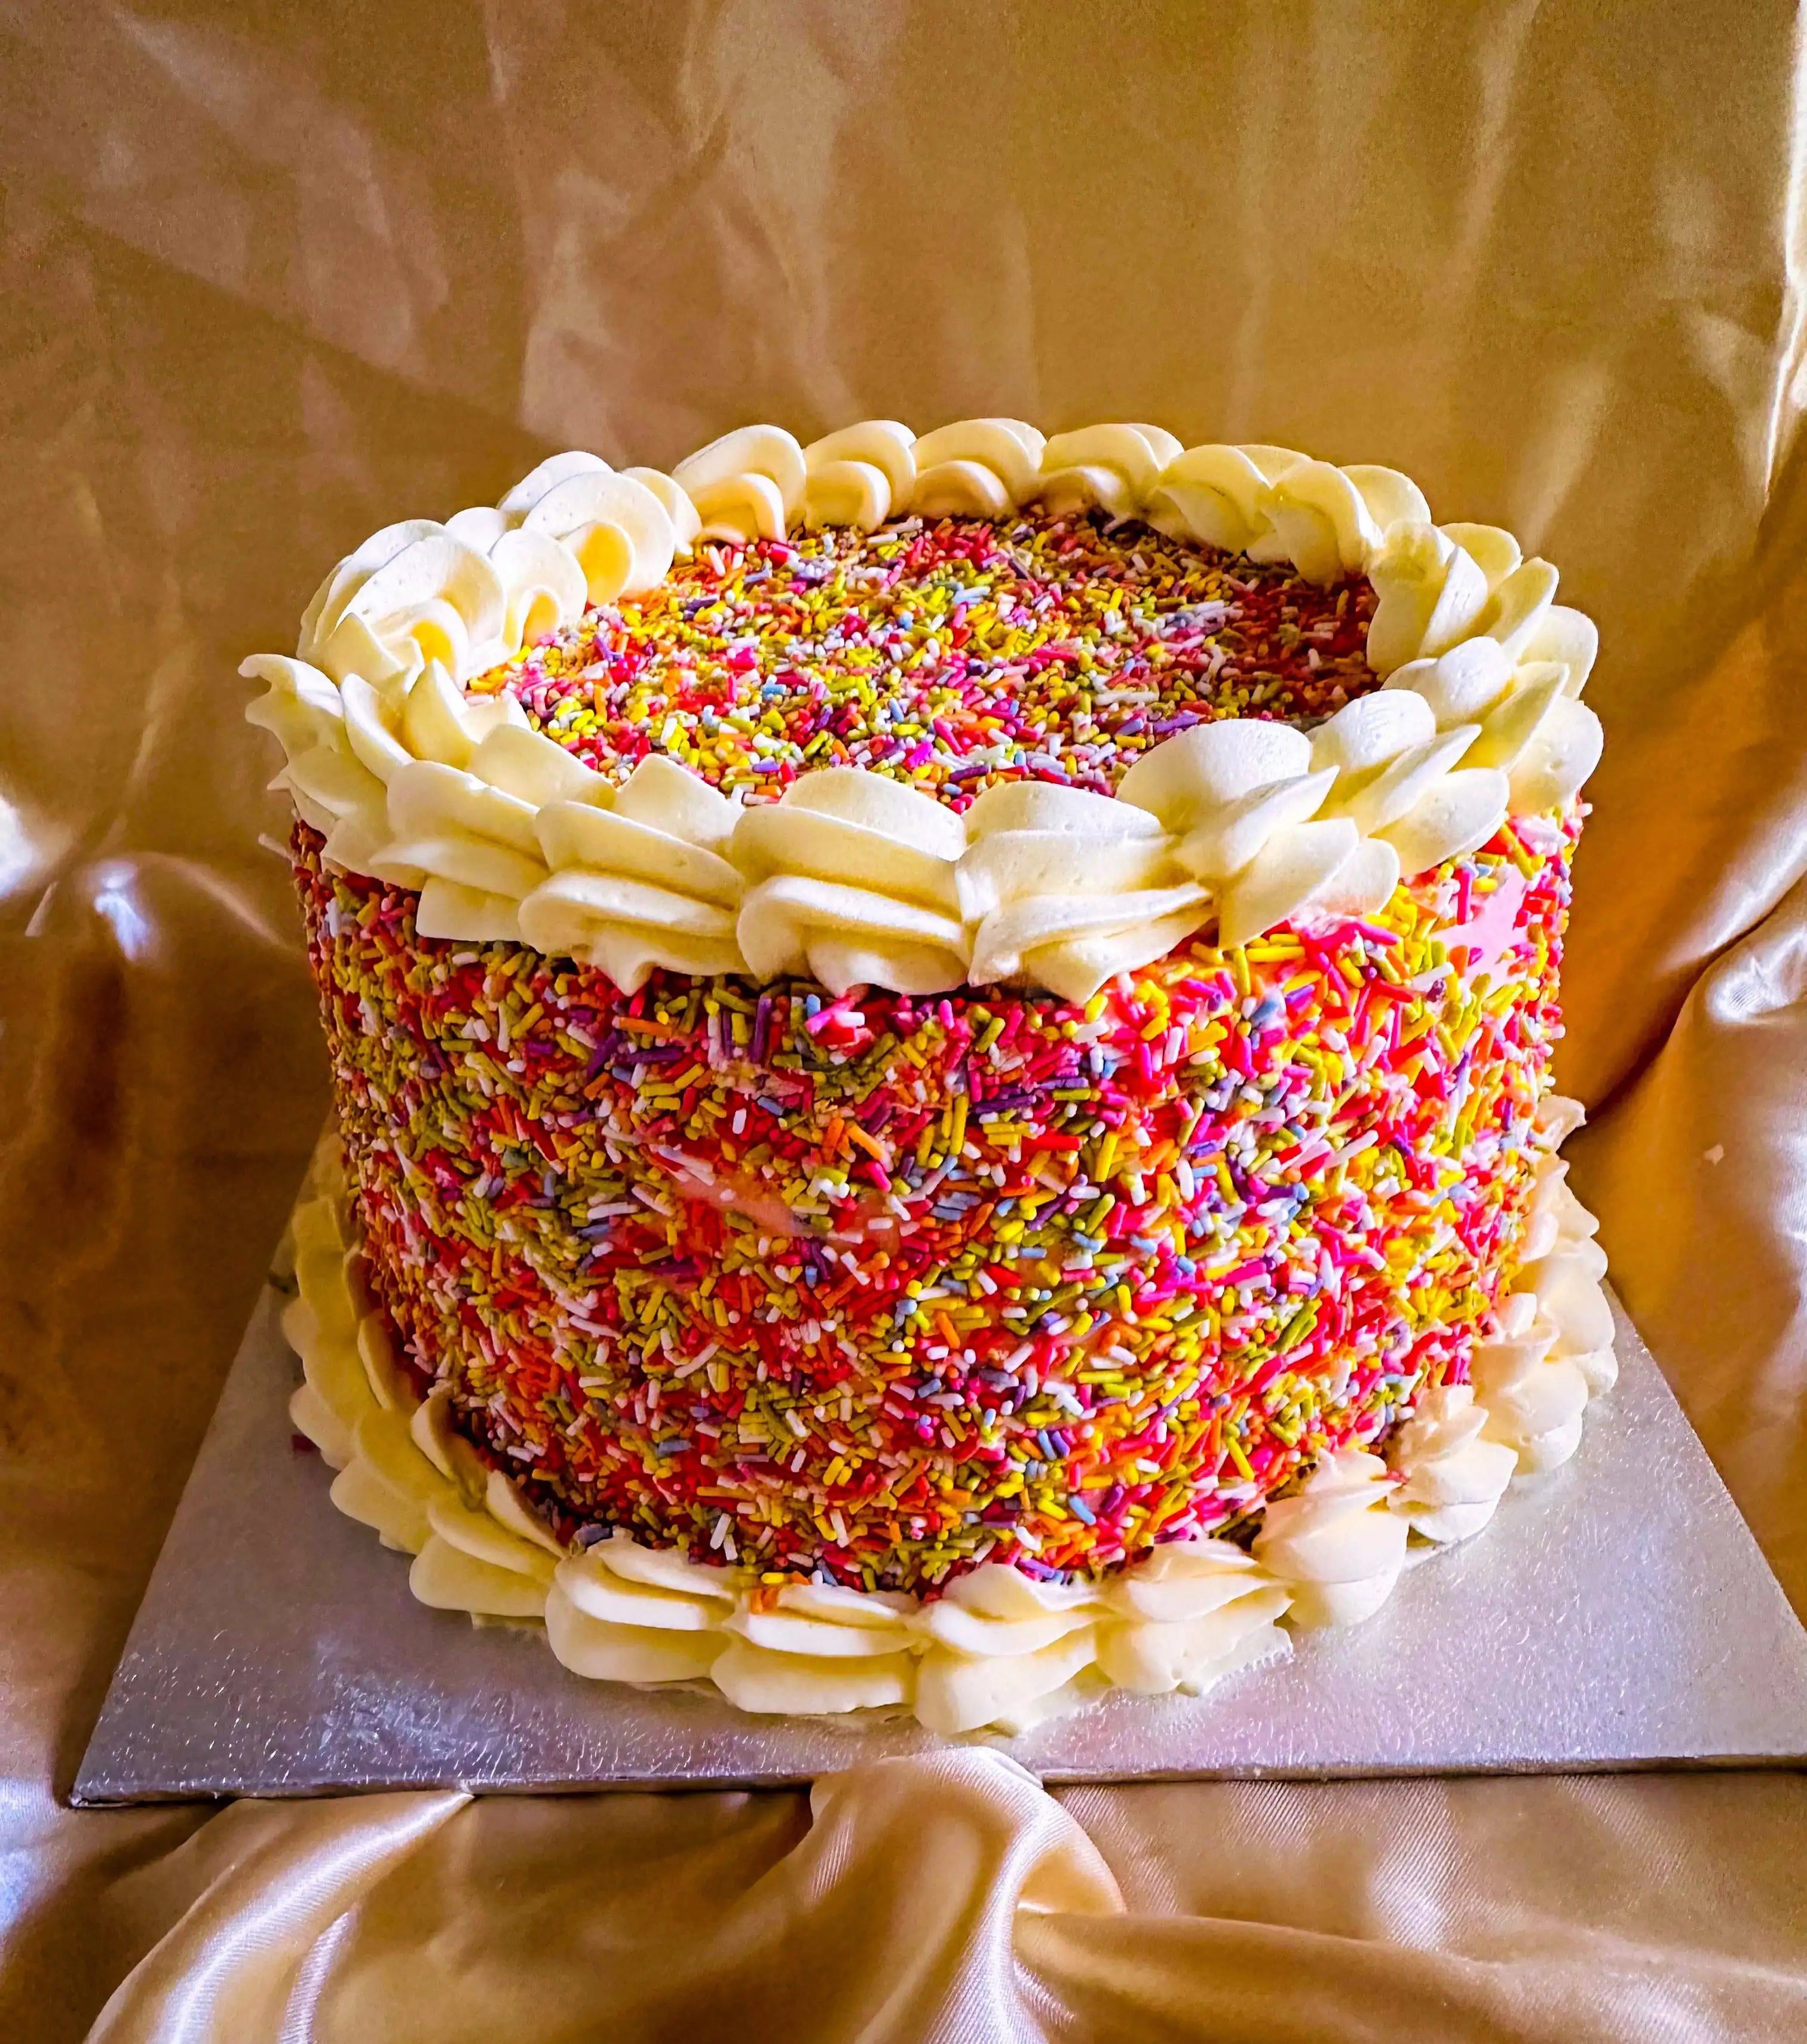 Custom-made birthday cake - Picture of Bagels & Bites, Ilford - Tripadvisor